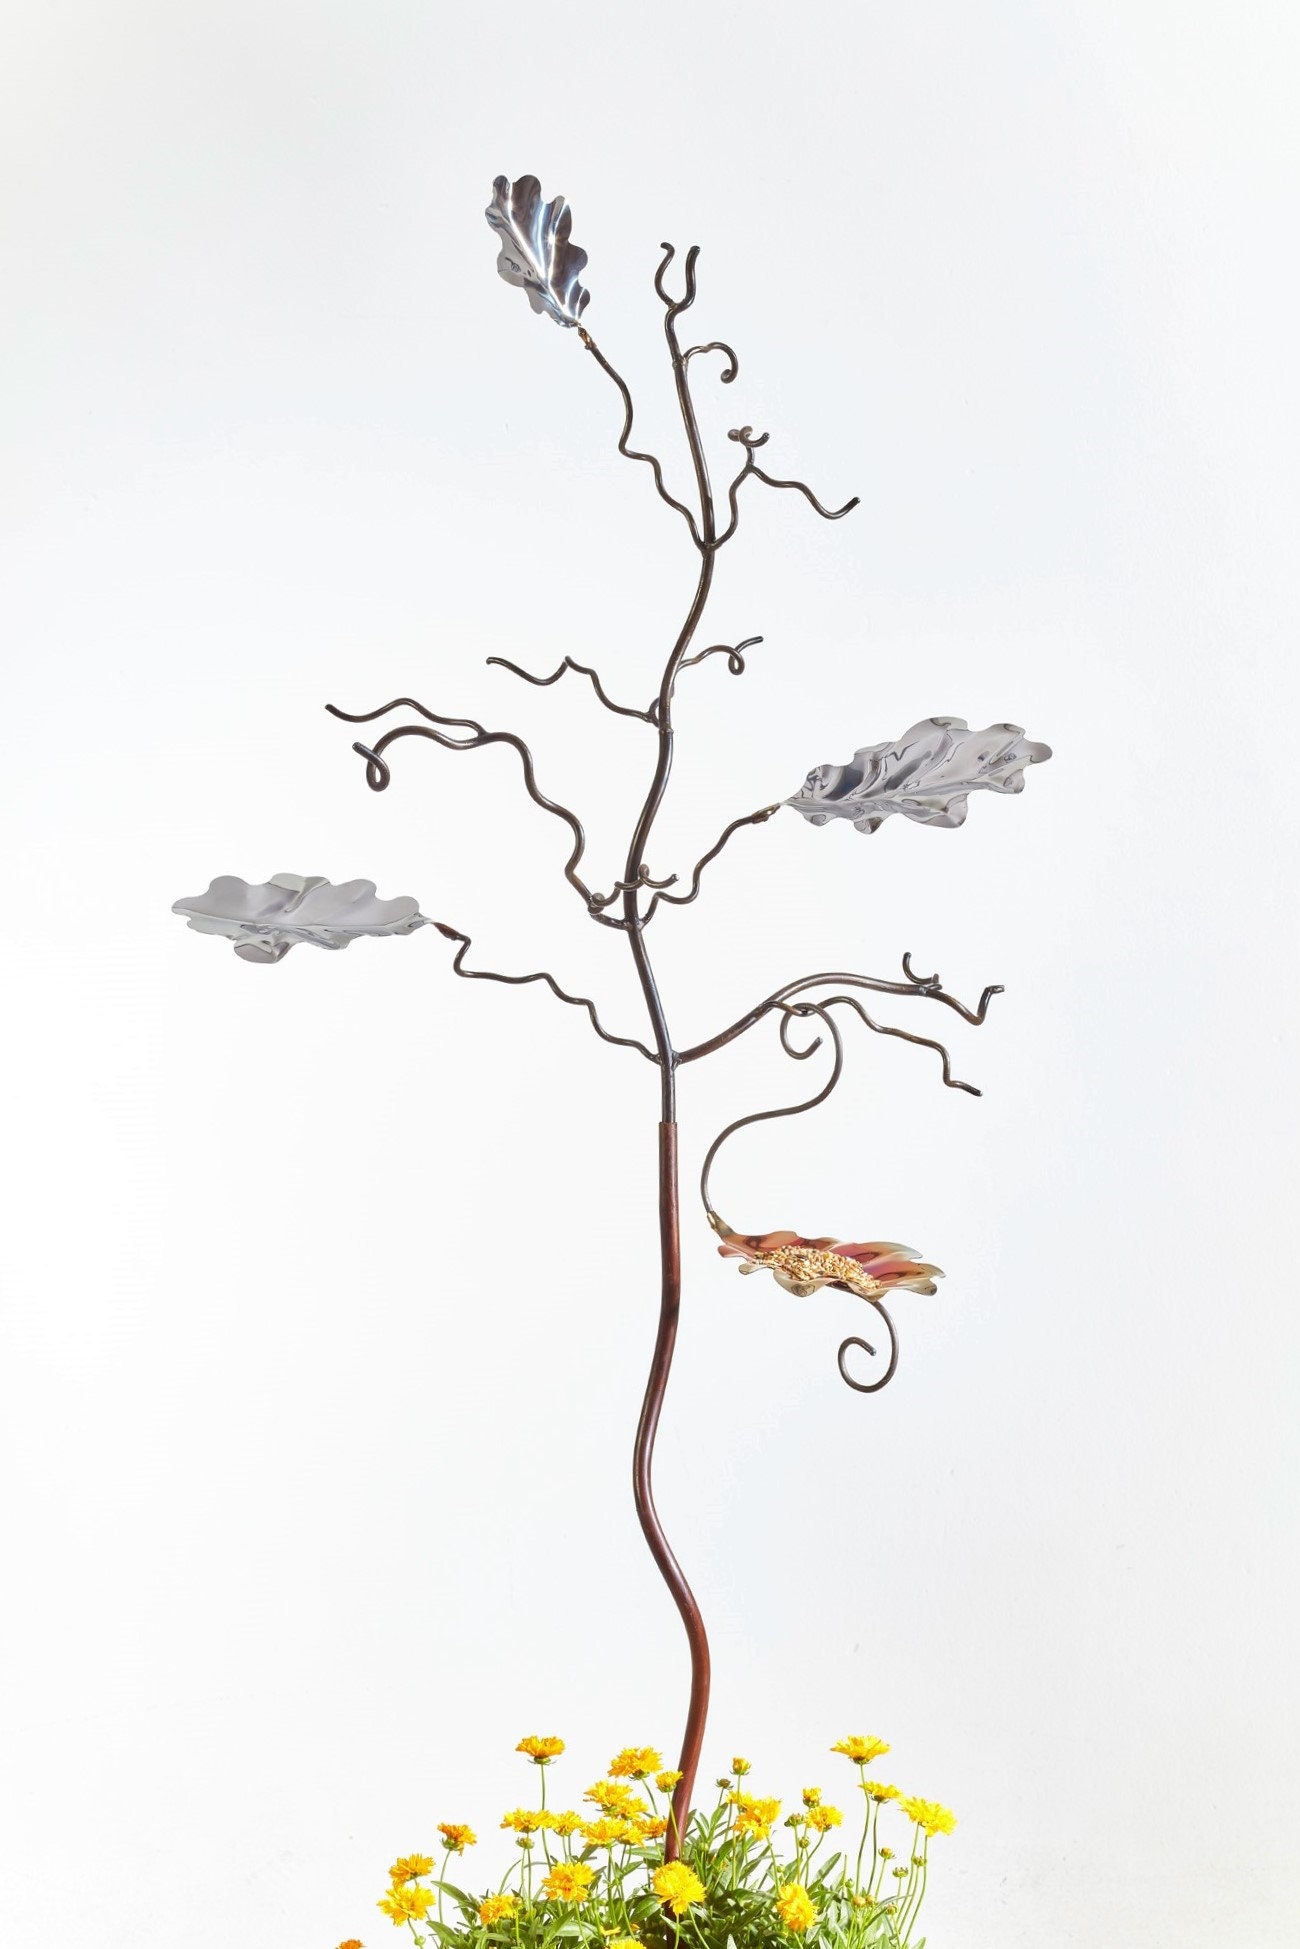 Birdfeeder Tree Bird Stand Sculpture With Oak Leaves in pic